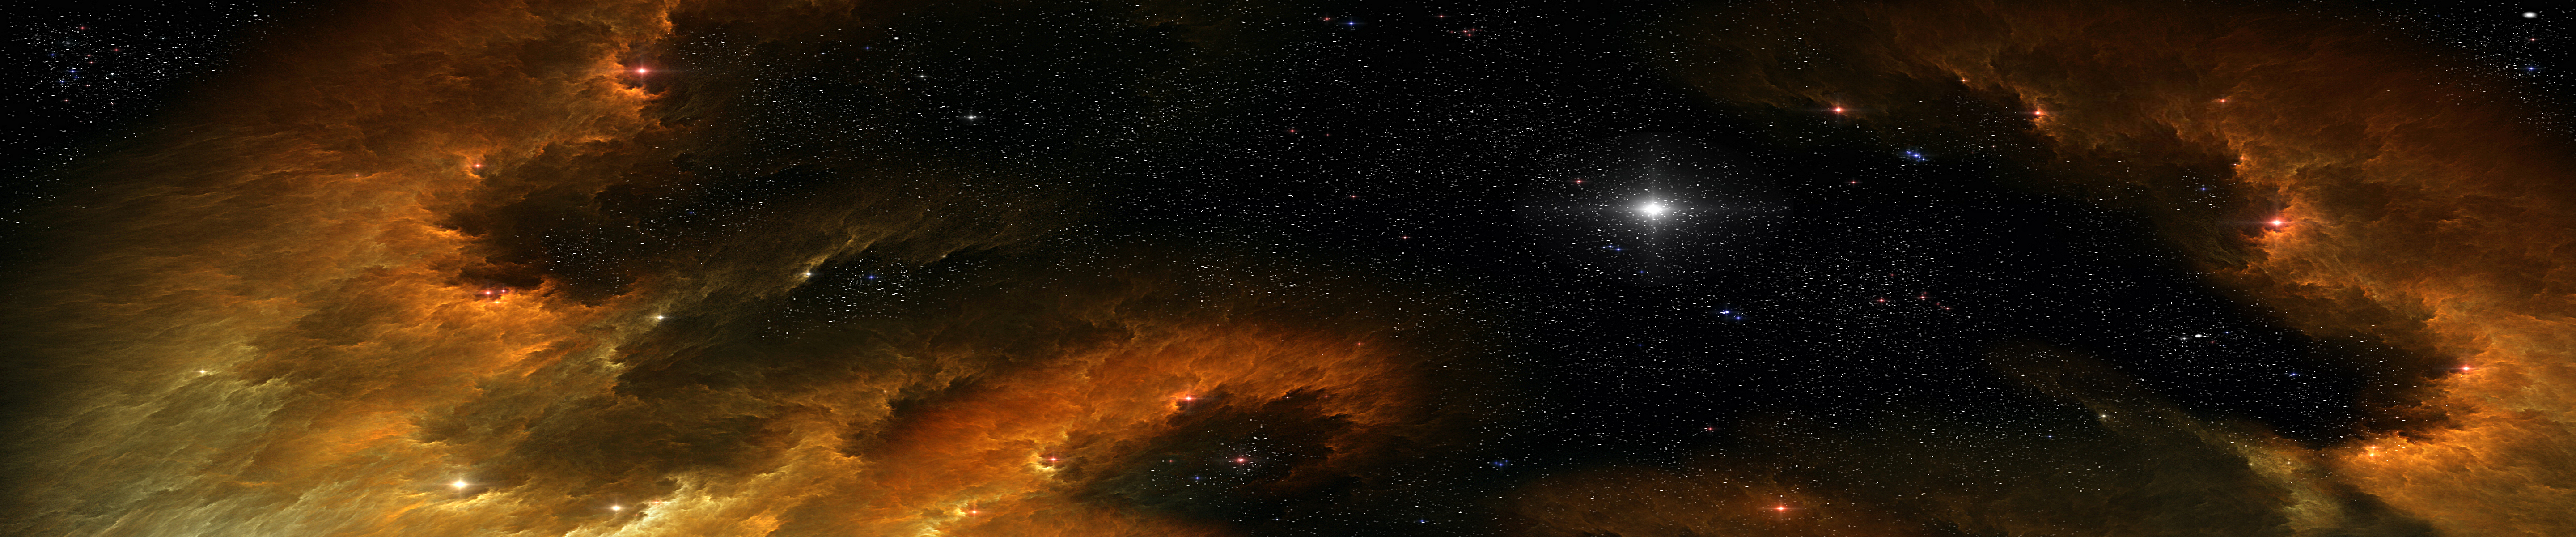 nebulae Wallpaper